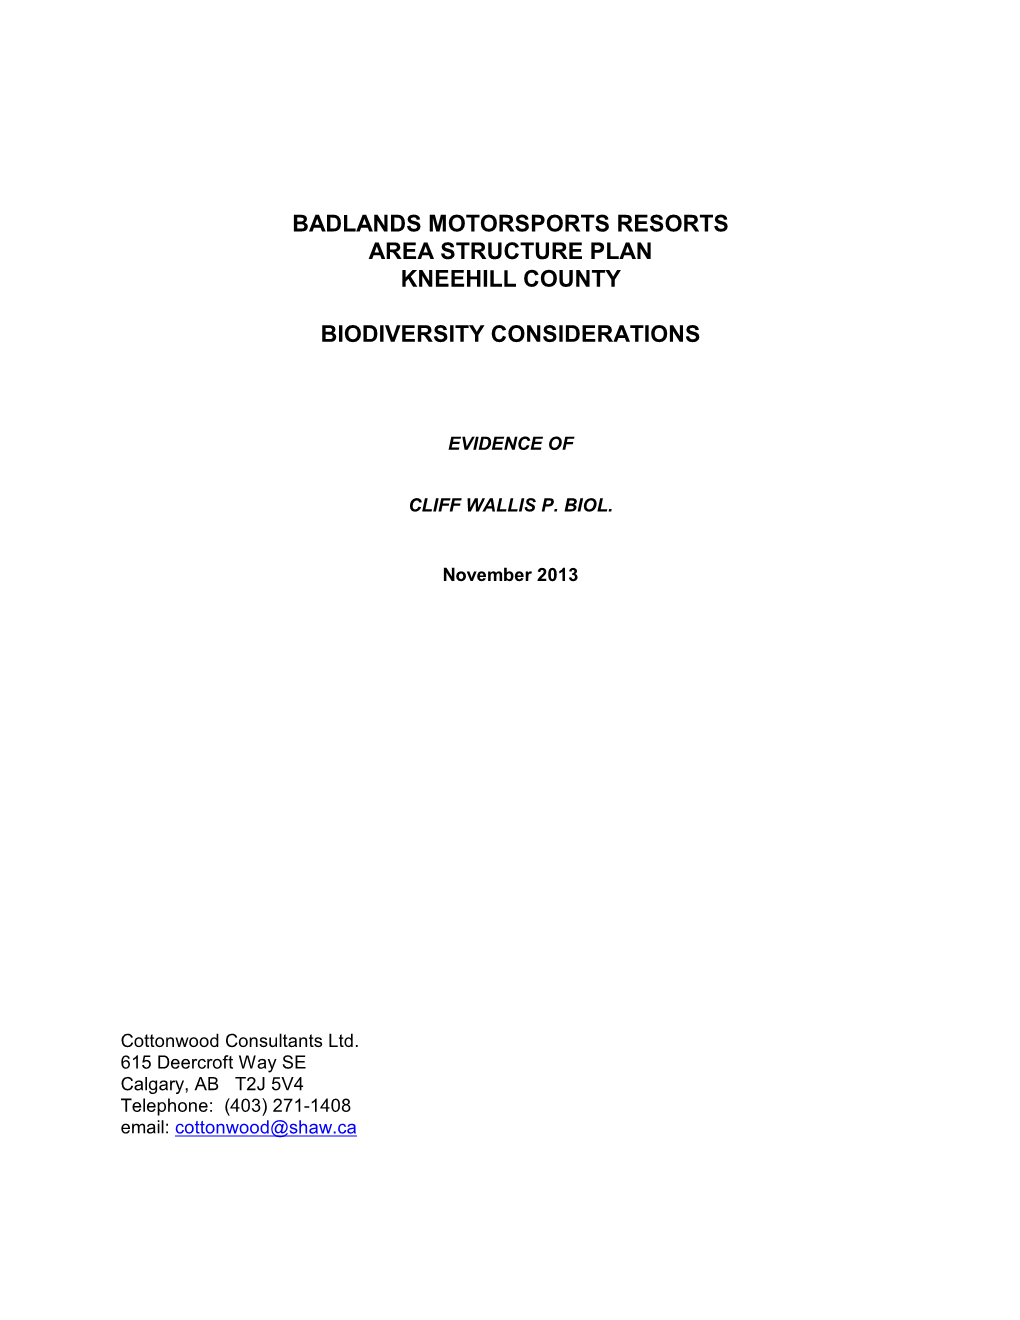 Biodiversity Considerations Badlands Motorsports Resort Area Structure Plan, Nov, 2013